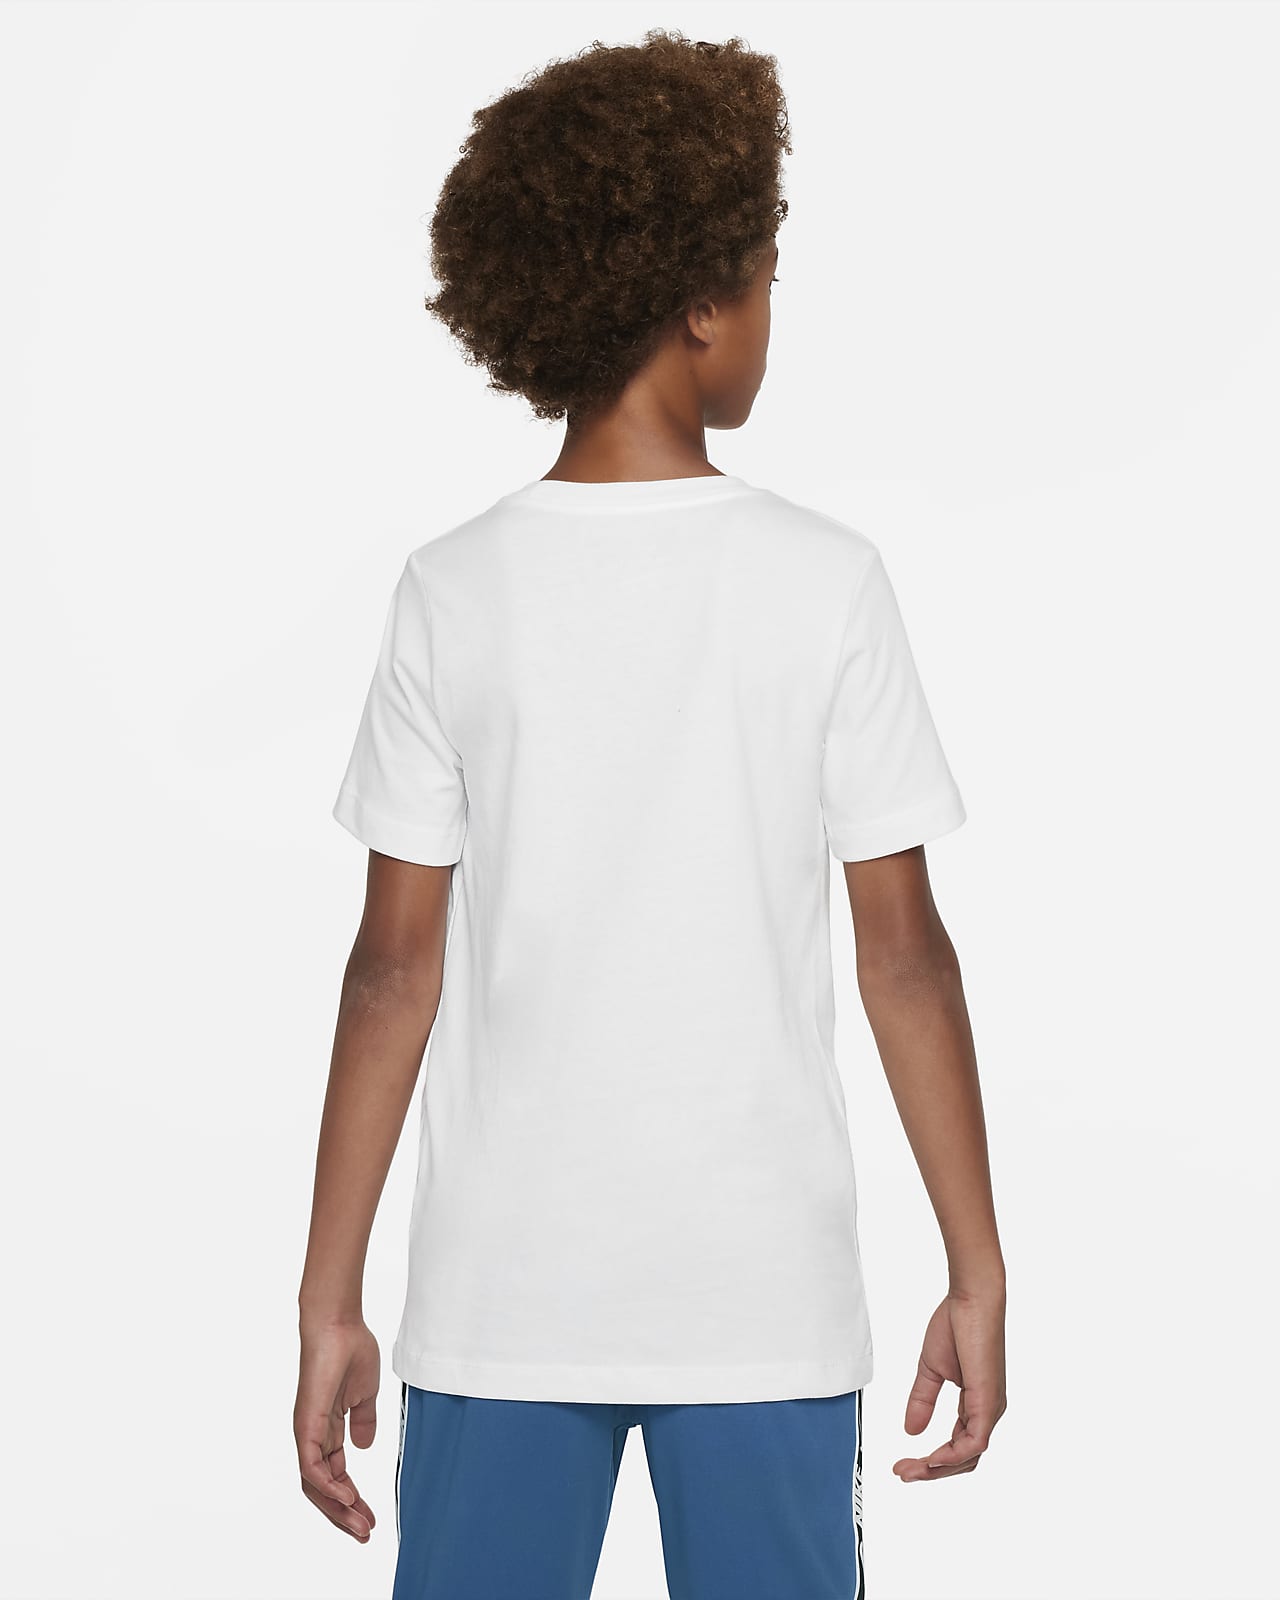 Inglaterra Camiseta Niño/a. Nike